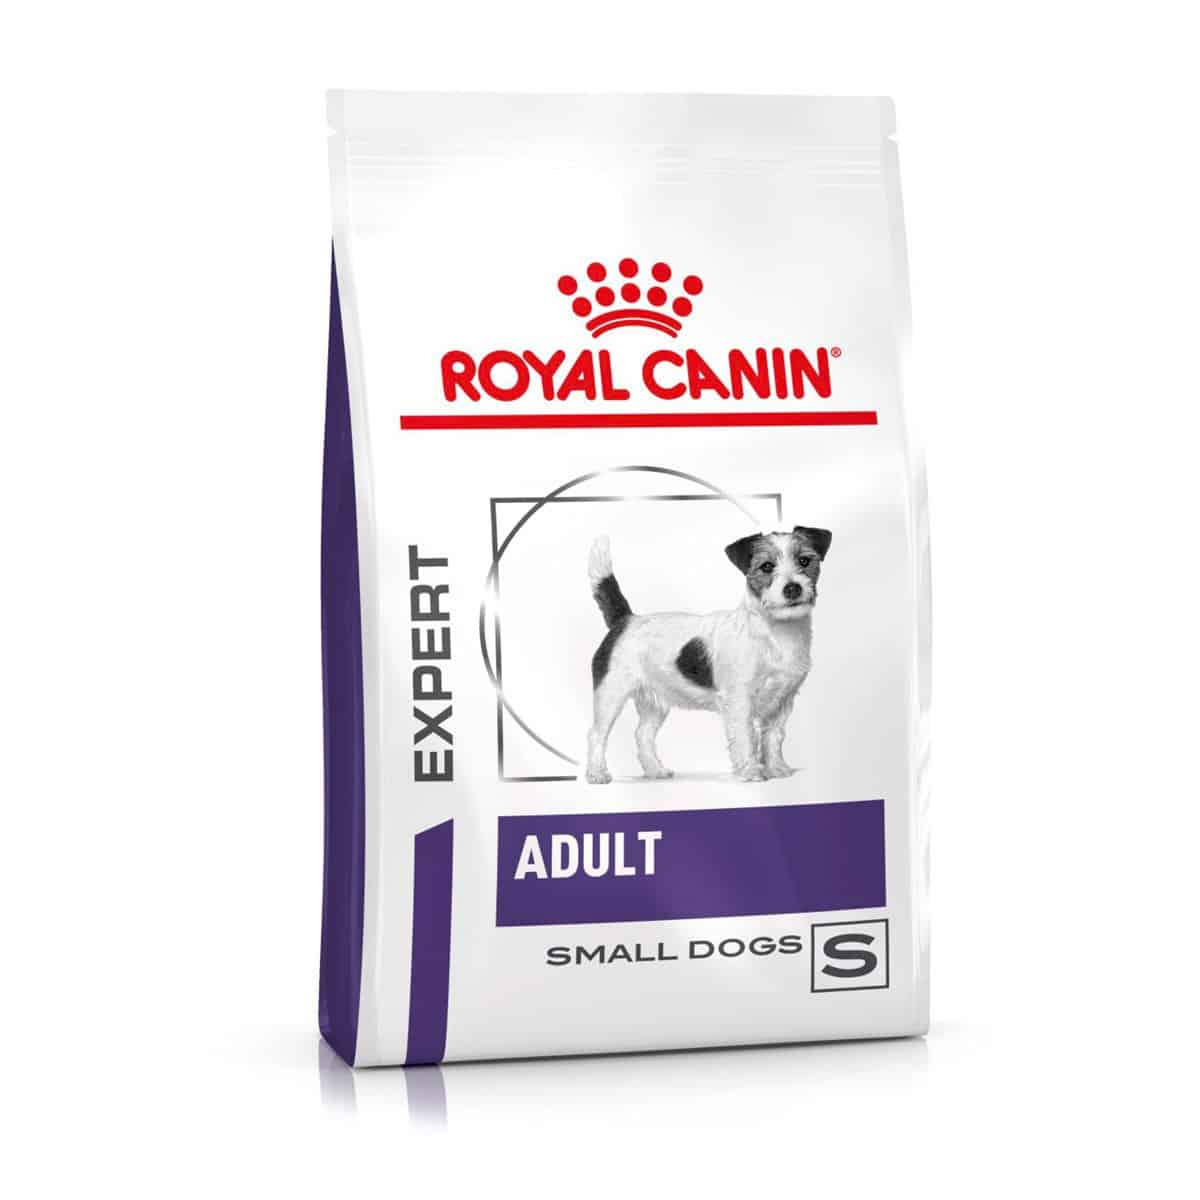 ROYAL CANIN® Expert ADULT SMALL DOGS Trockenfutter für Hunde 4kg